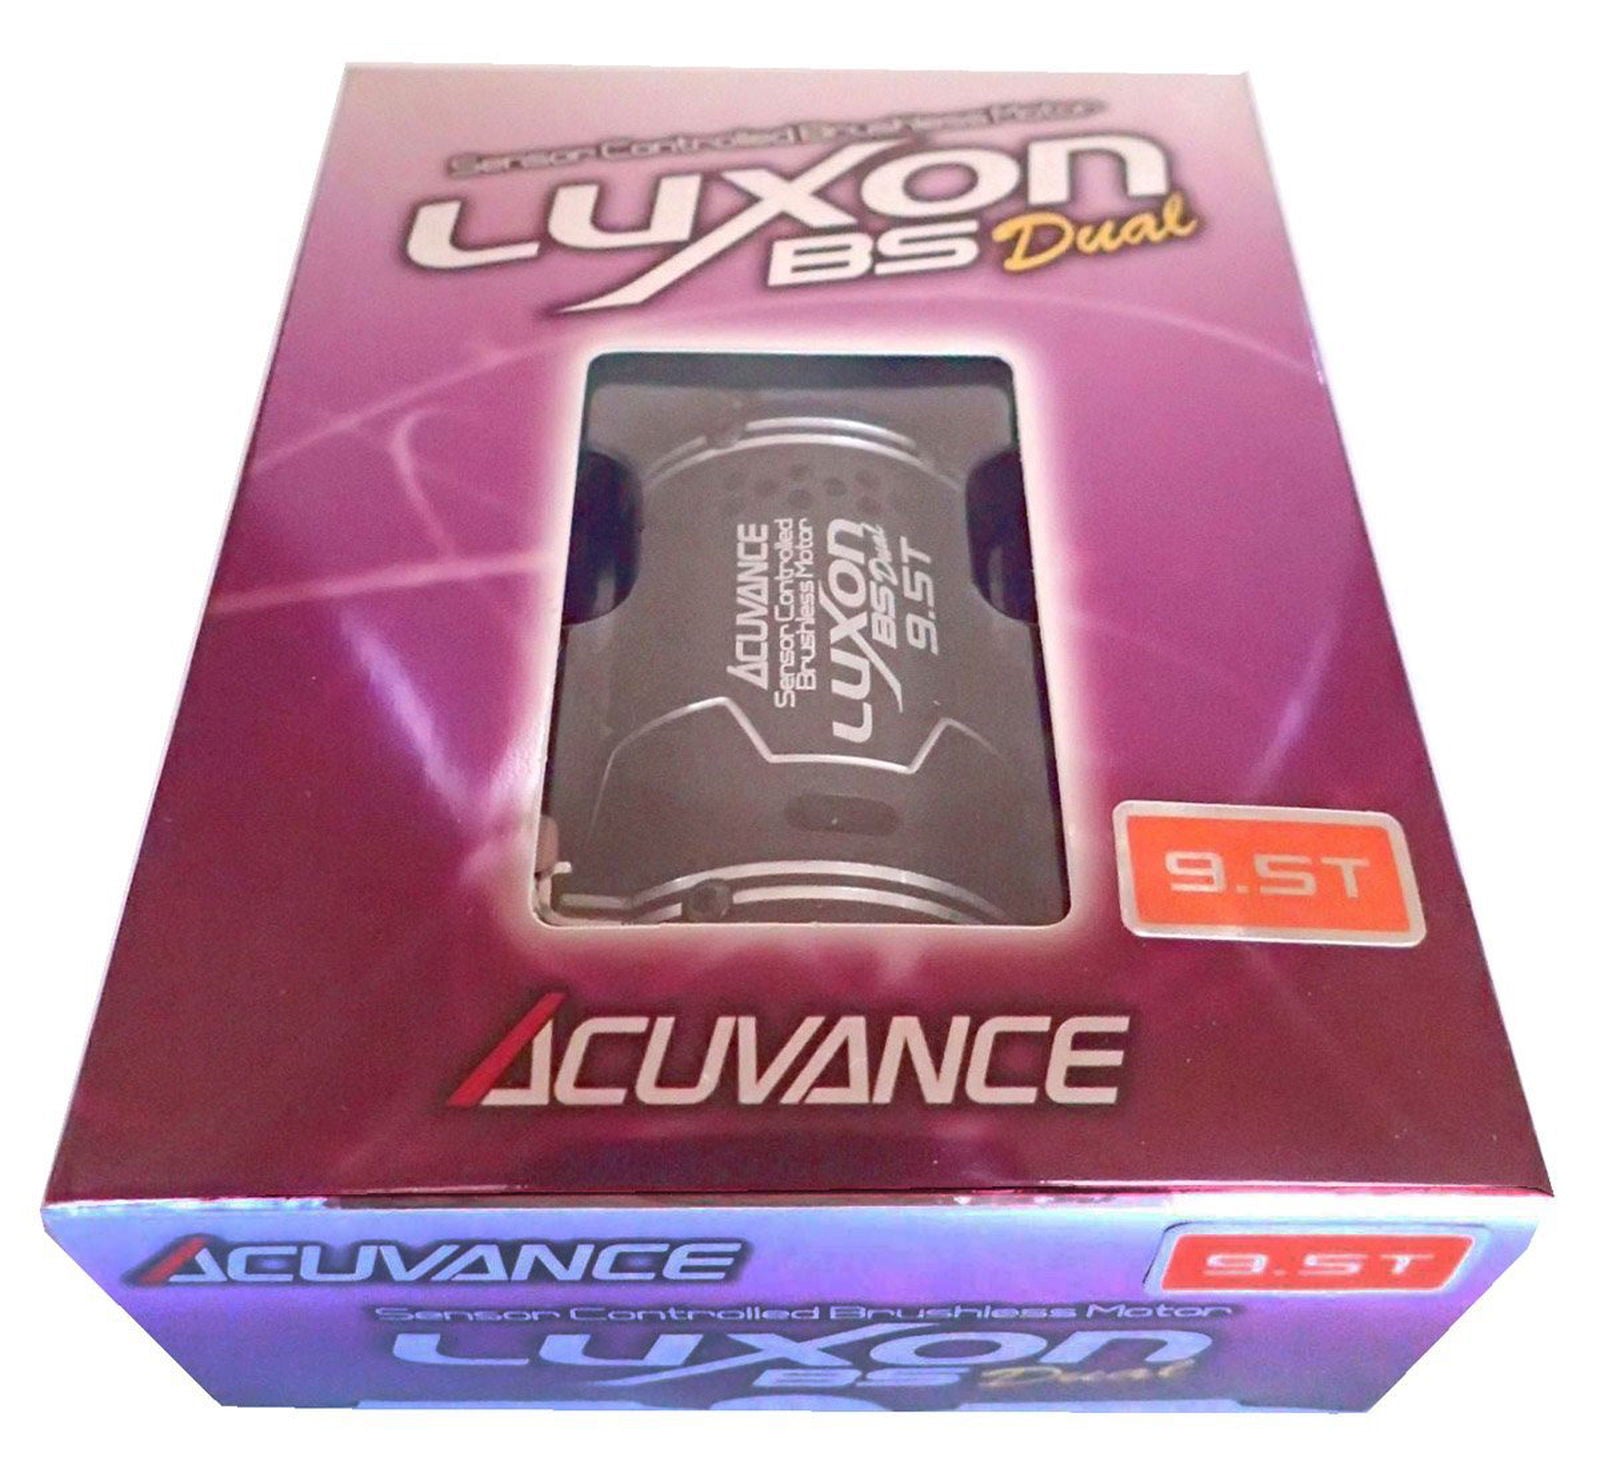 Acuvance (Keyence) Luxon BS Dual 9.5T with COA 5G (FREE!) - BanzaiHobby